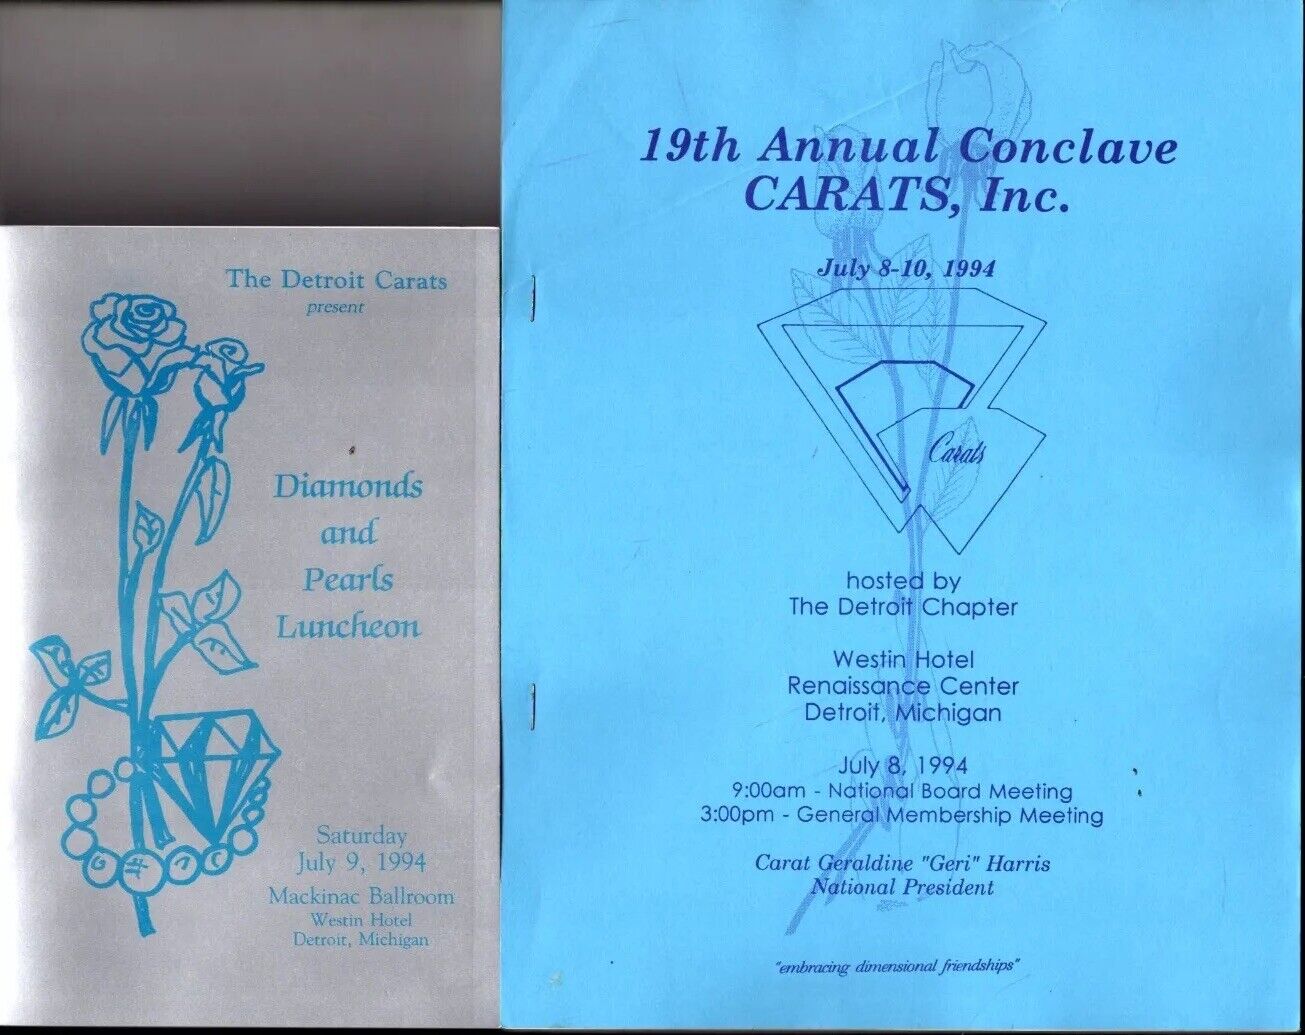 19th Annual Conclave CARATS, INC. Program Book Ephemera, July 8-10, 1994 Vintage